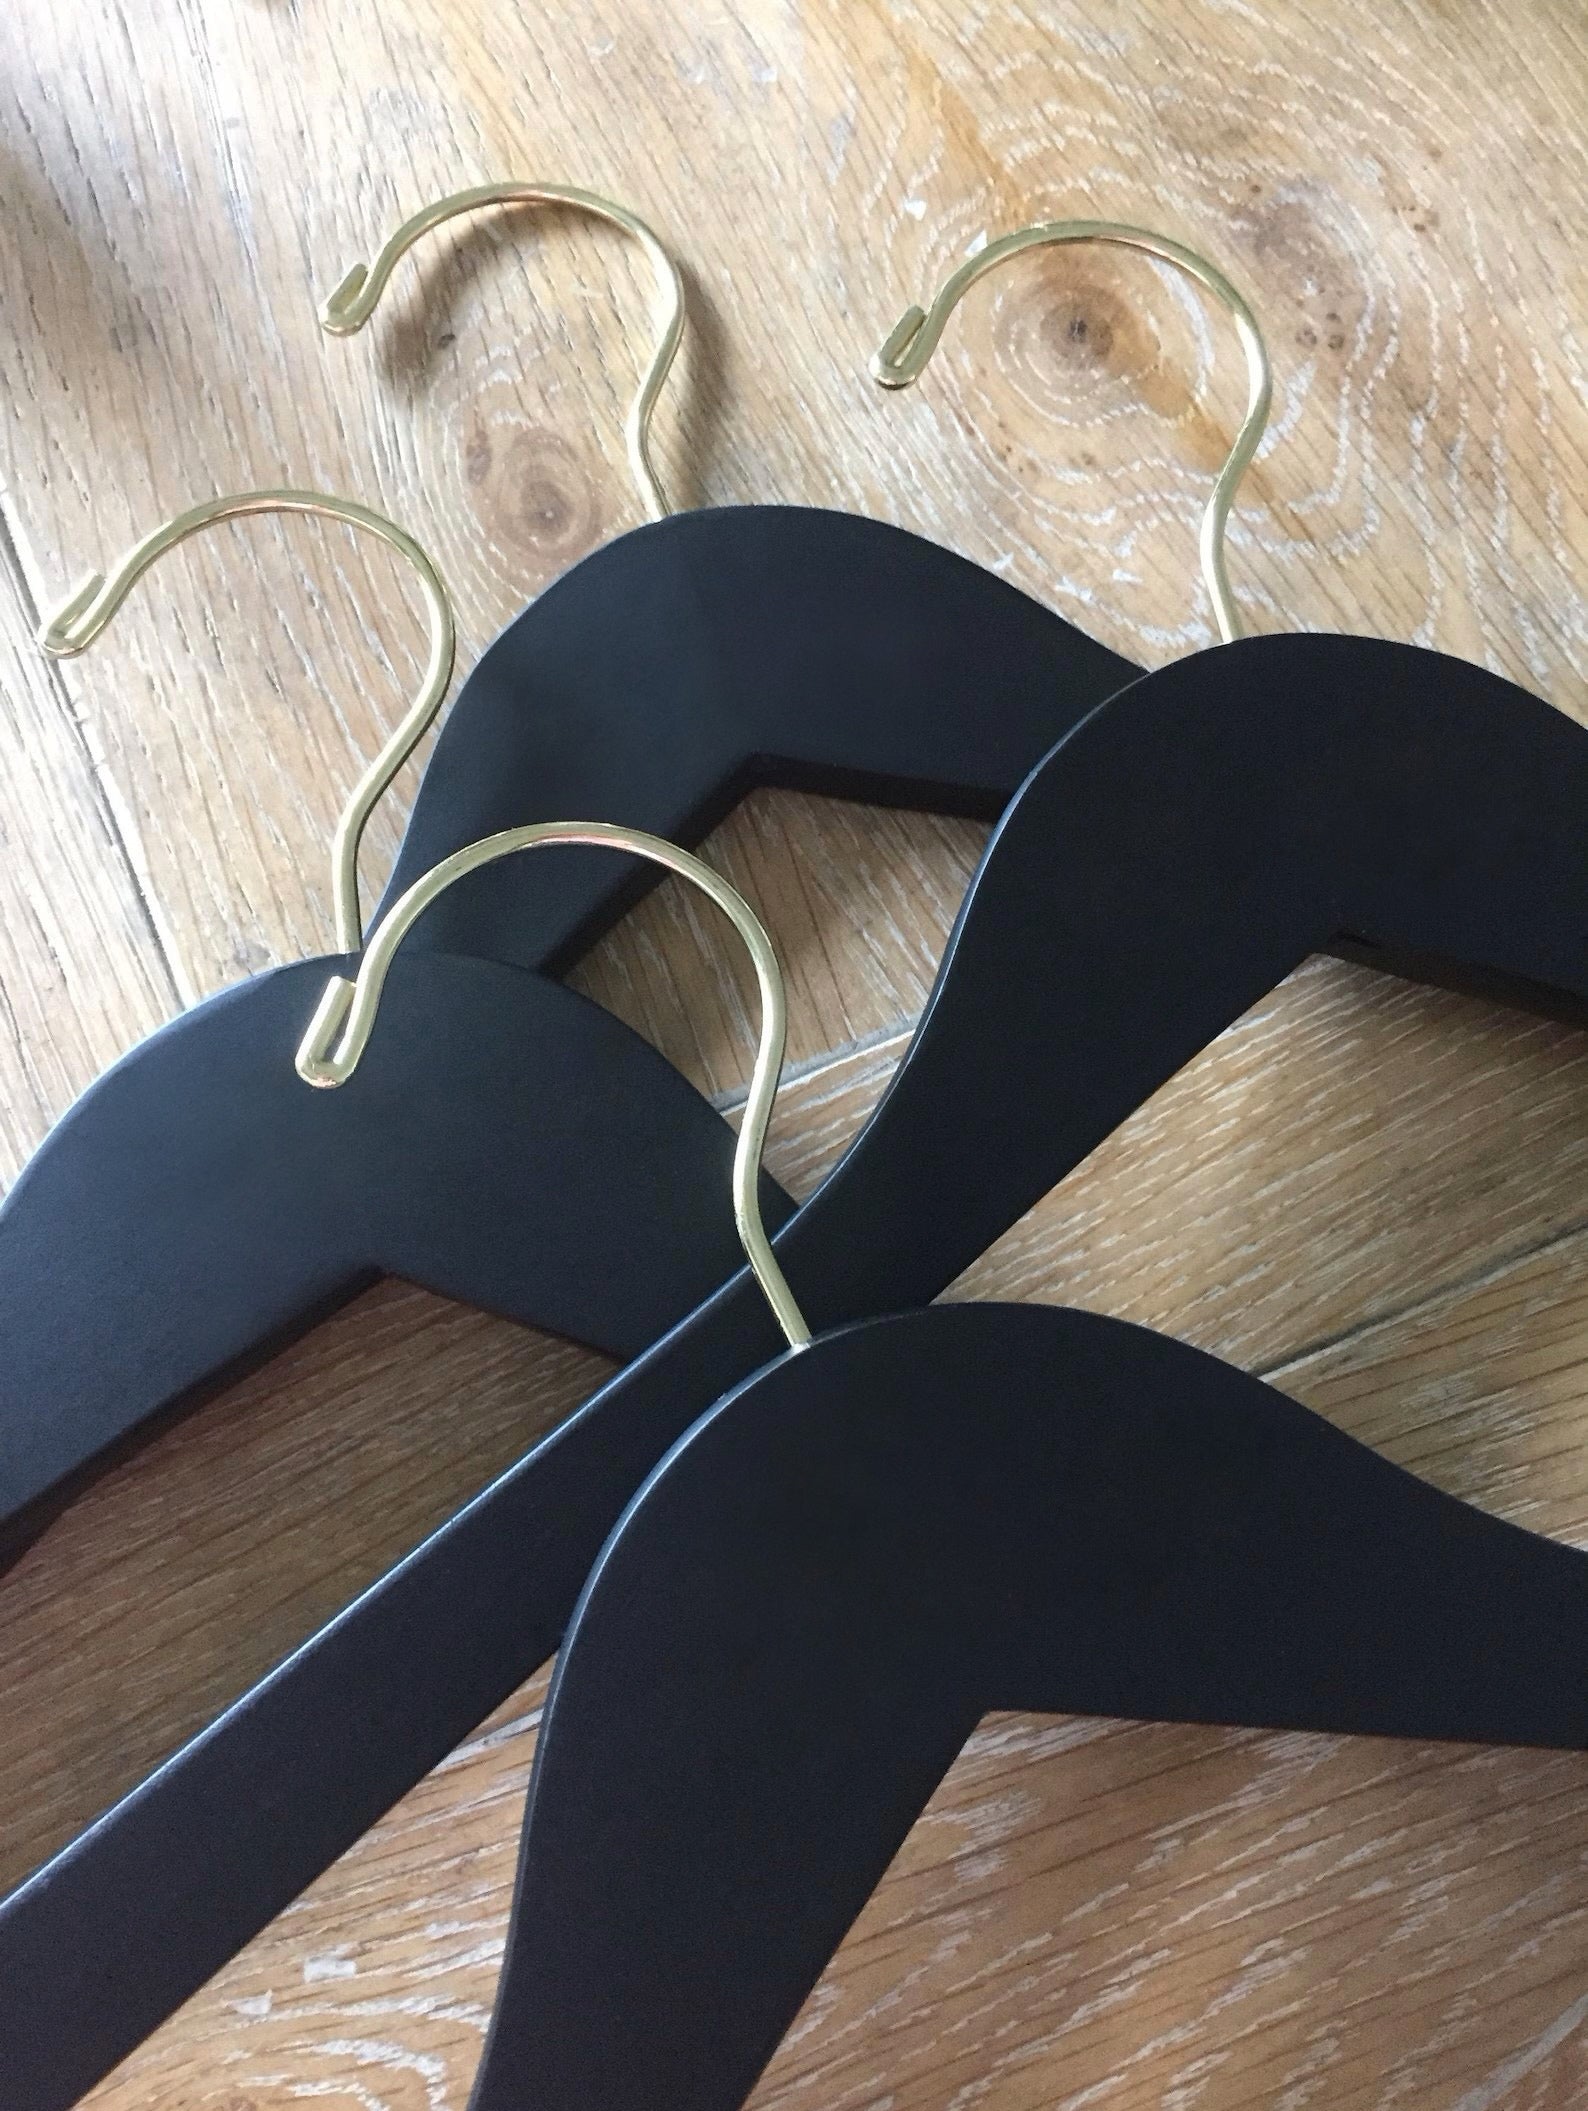 Four Matte Black Wood Adult Clothes Hangers with gold hooks for custom bridal hanger designers lying on wood floor #hook-color_gold-hook